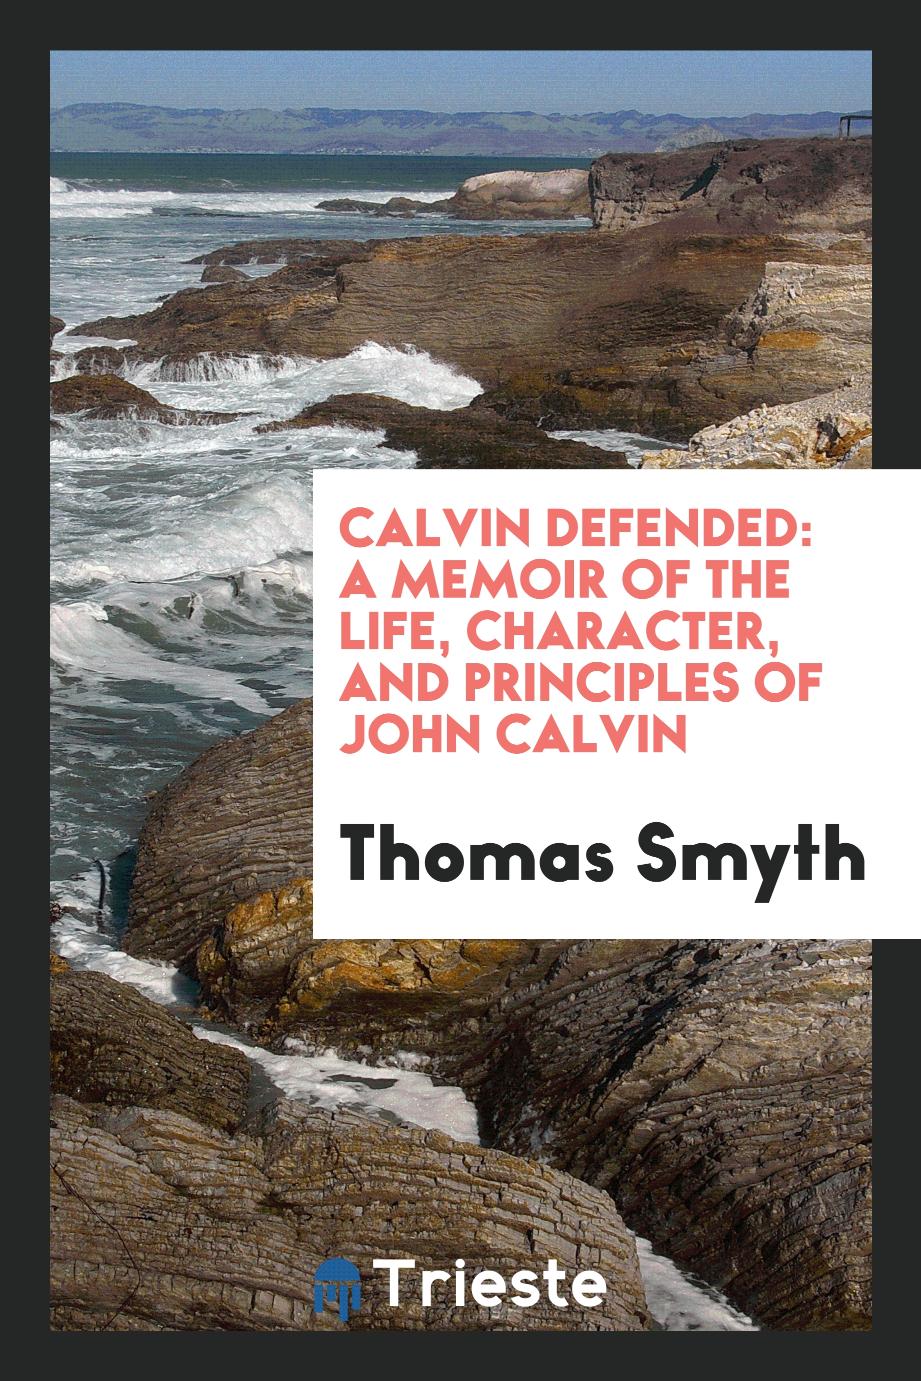 Calvin defended: a memoir of the life, character, and principles of John Calvin